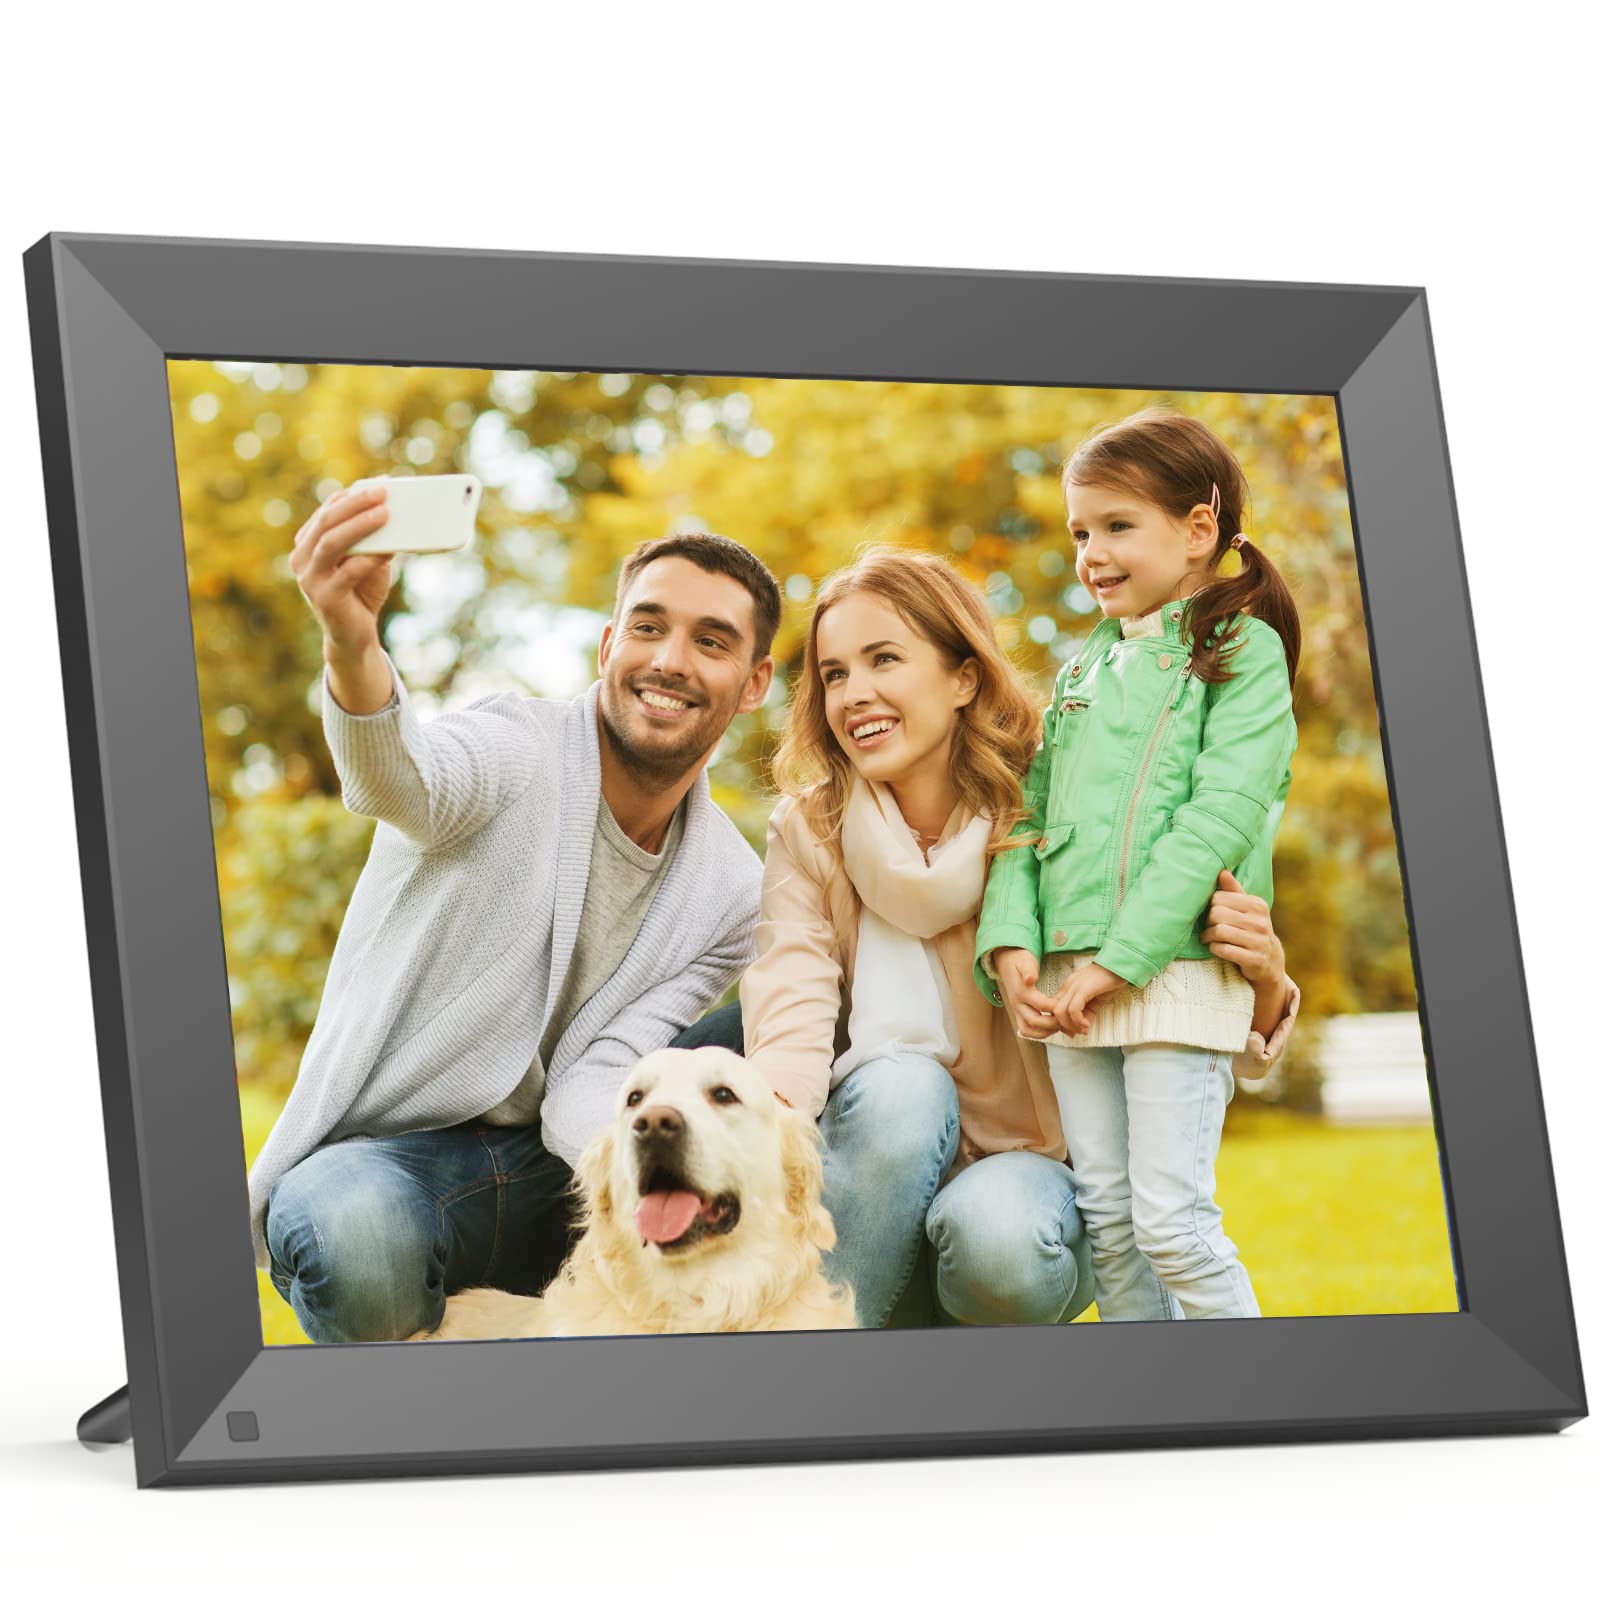 Fullja Wifi Digital Picture Frame 8-inch Wood Effect Smart Digital Photo Frame 16GB Motion Sensor Full Function Wall Mountable, Sharing Photos Video